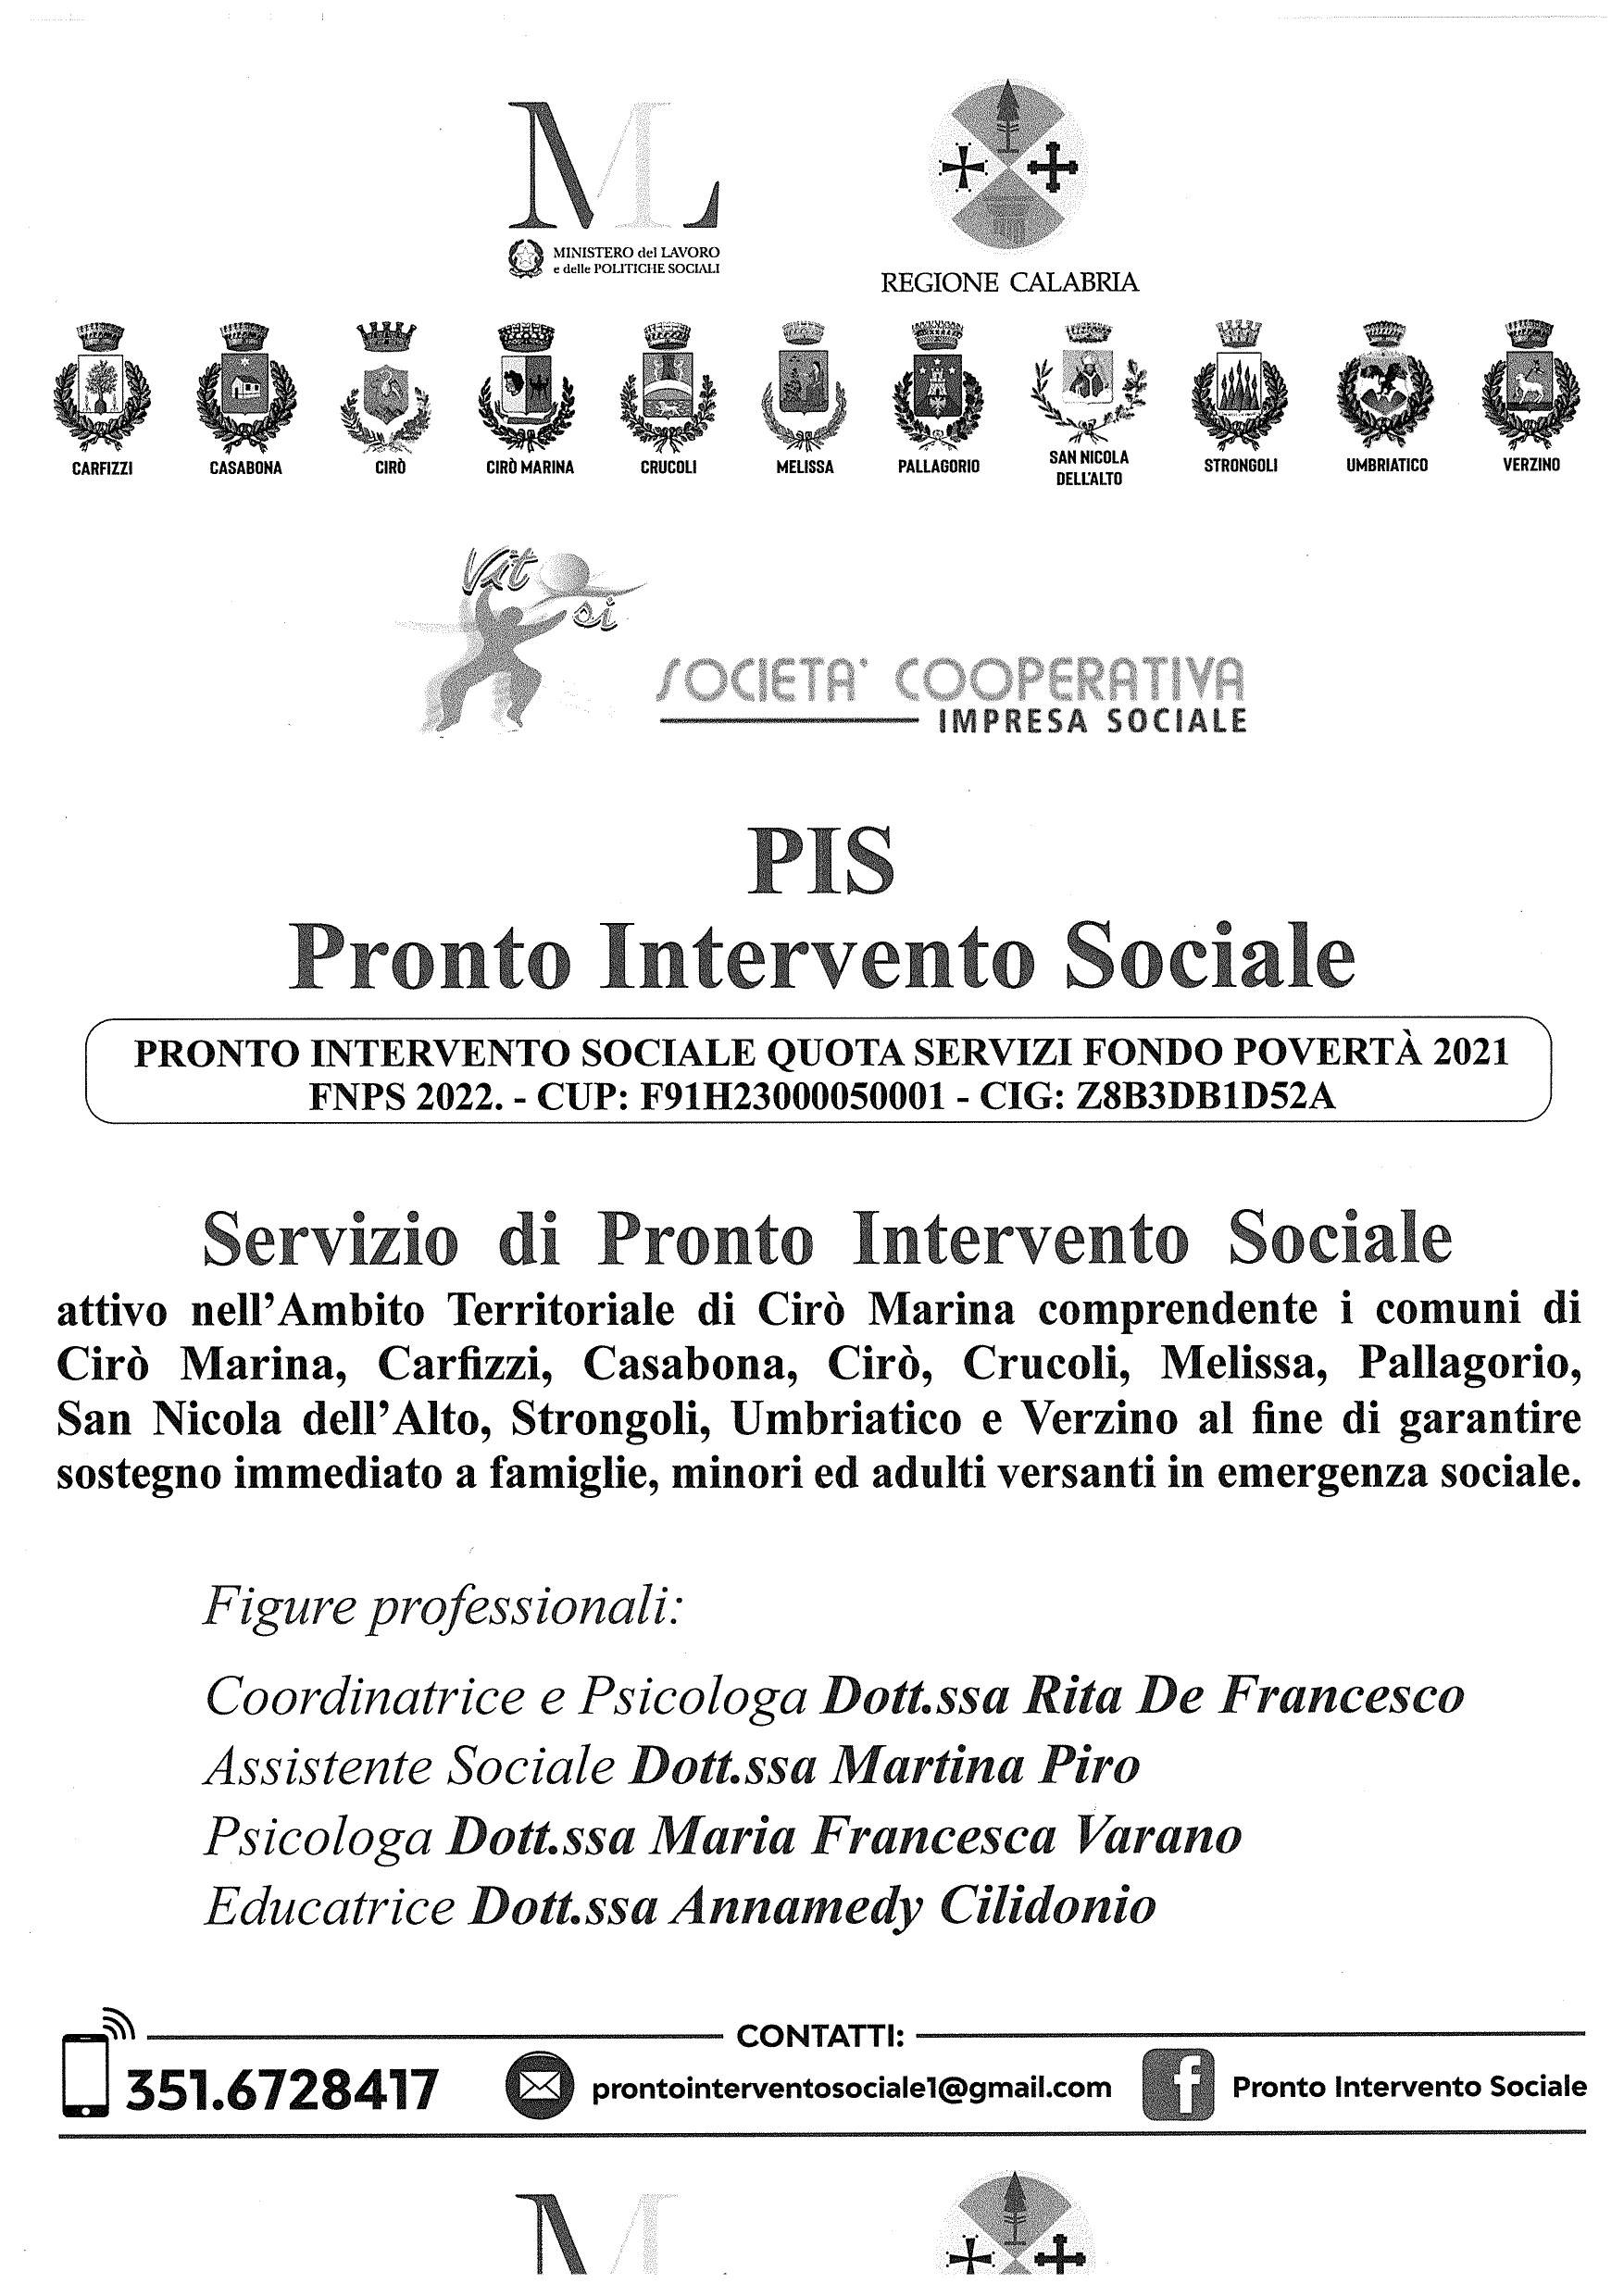 PIS - PRONTO INTERVENTO SOCIALE